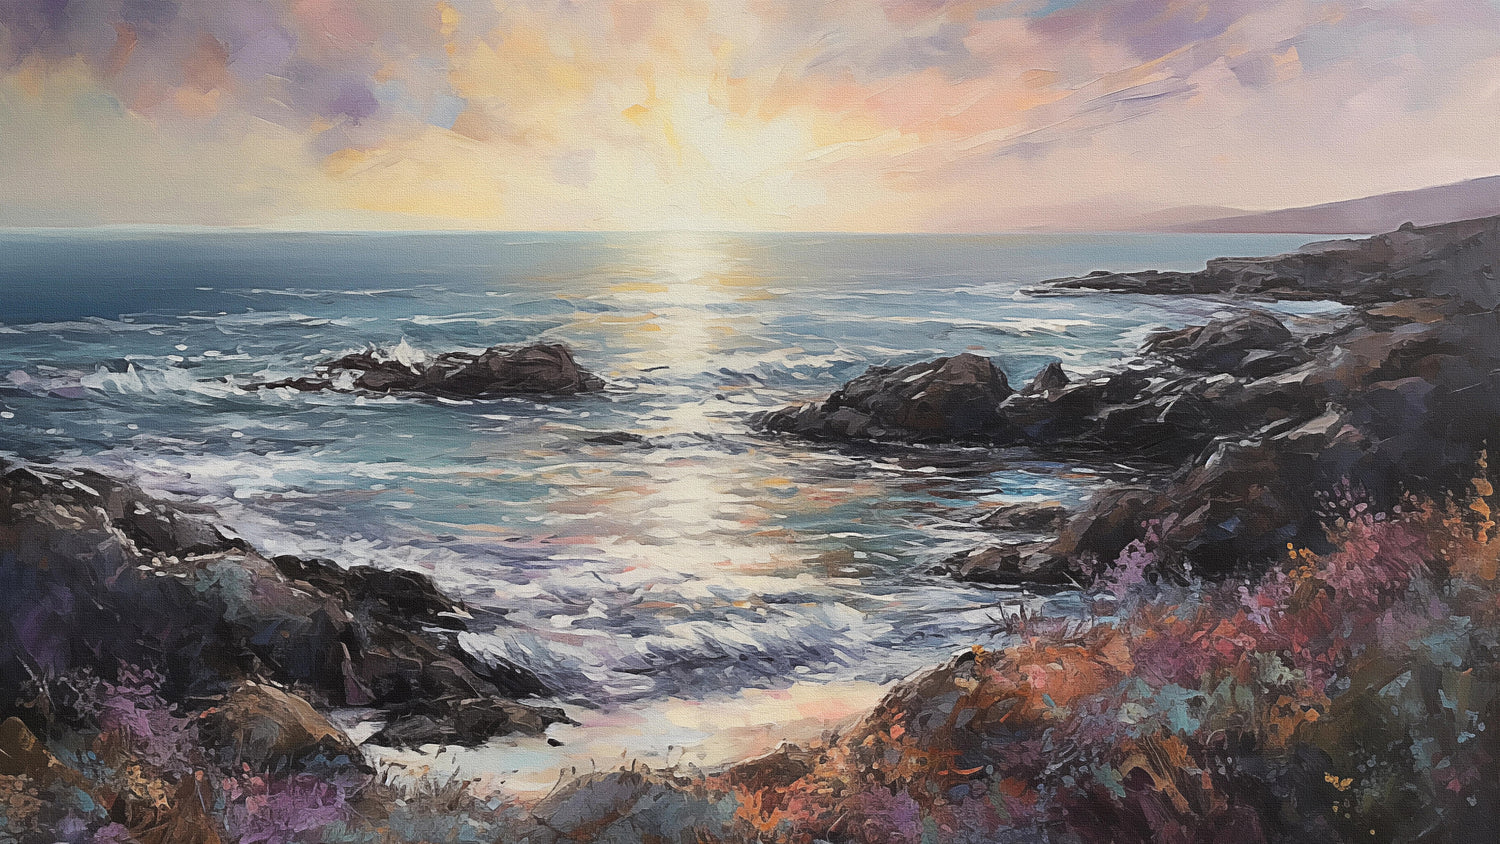 Samsung Frame TV Art Painting Cape Ocean Sunrise Digital Download